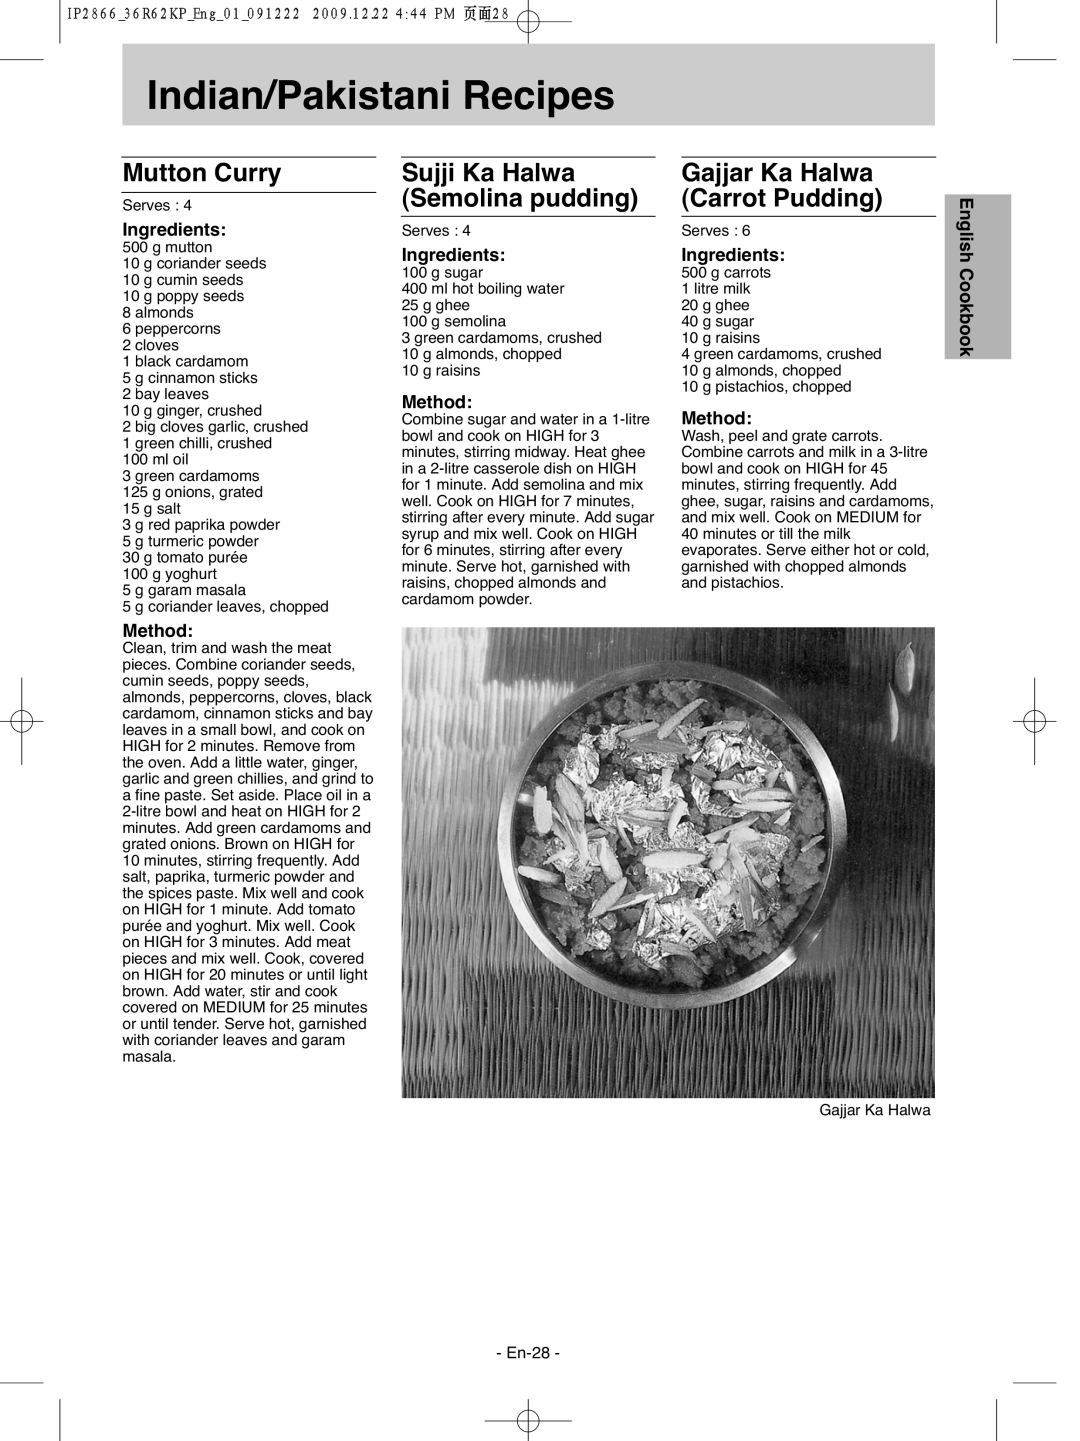 Panasonic NN-G335WF manual Mutton Curry, Gajjar Ka Halwa Carrot Pudding, Sujji Ka Halwa Semolina pudding 